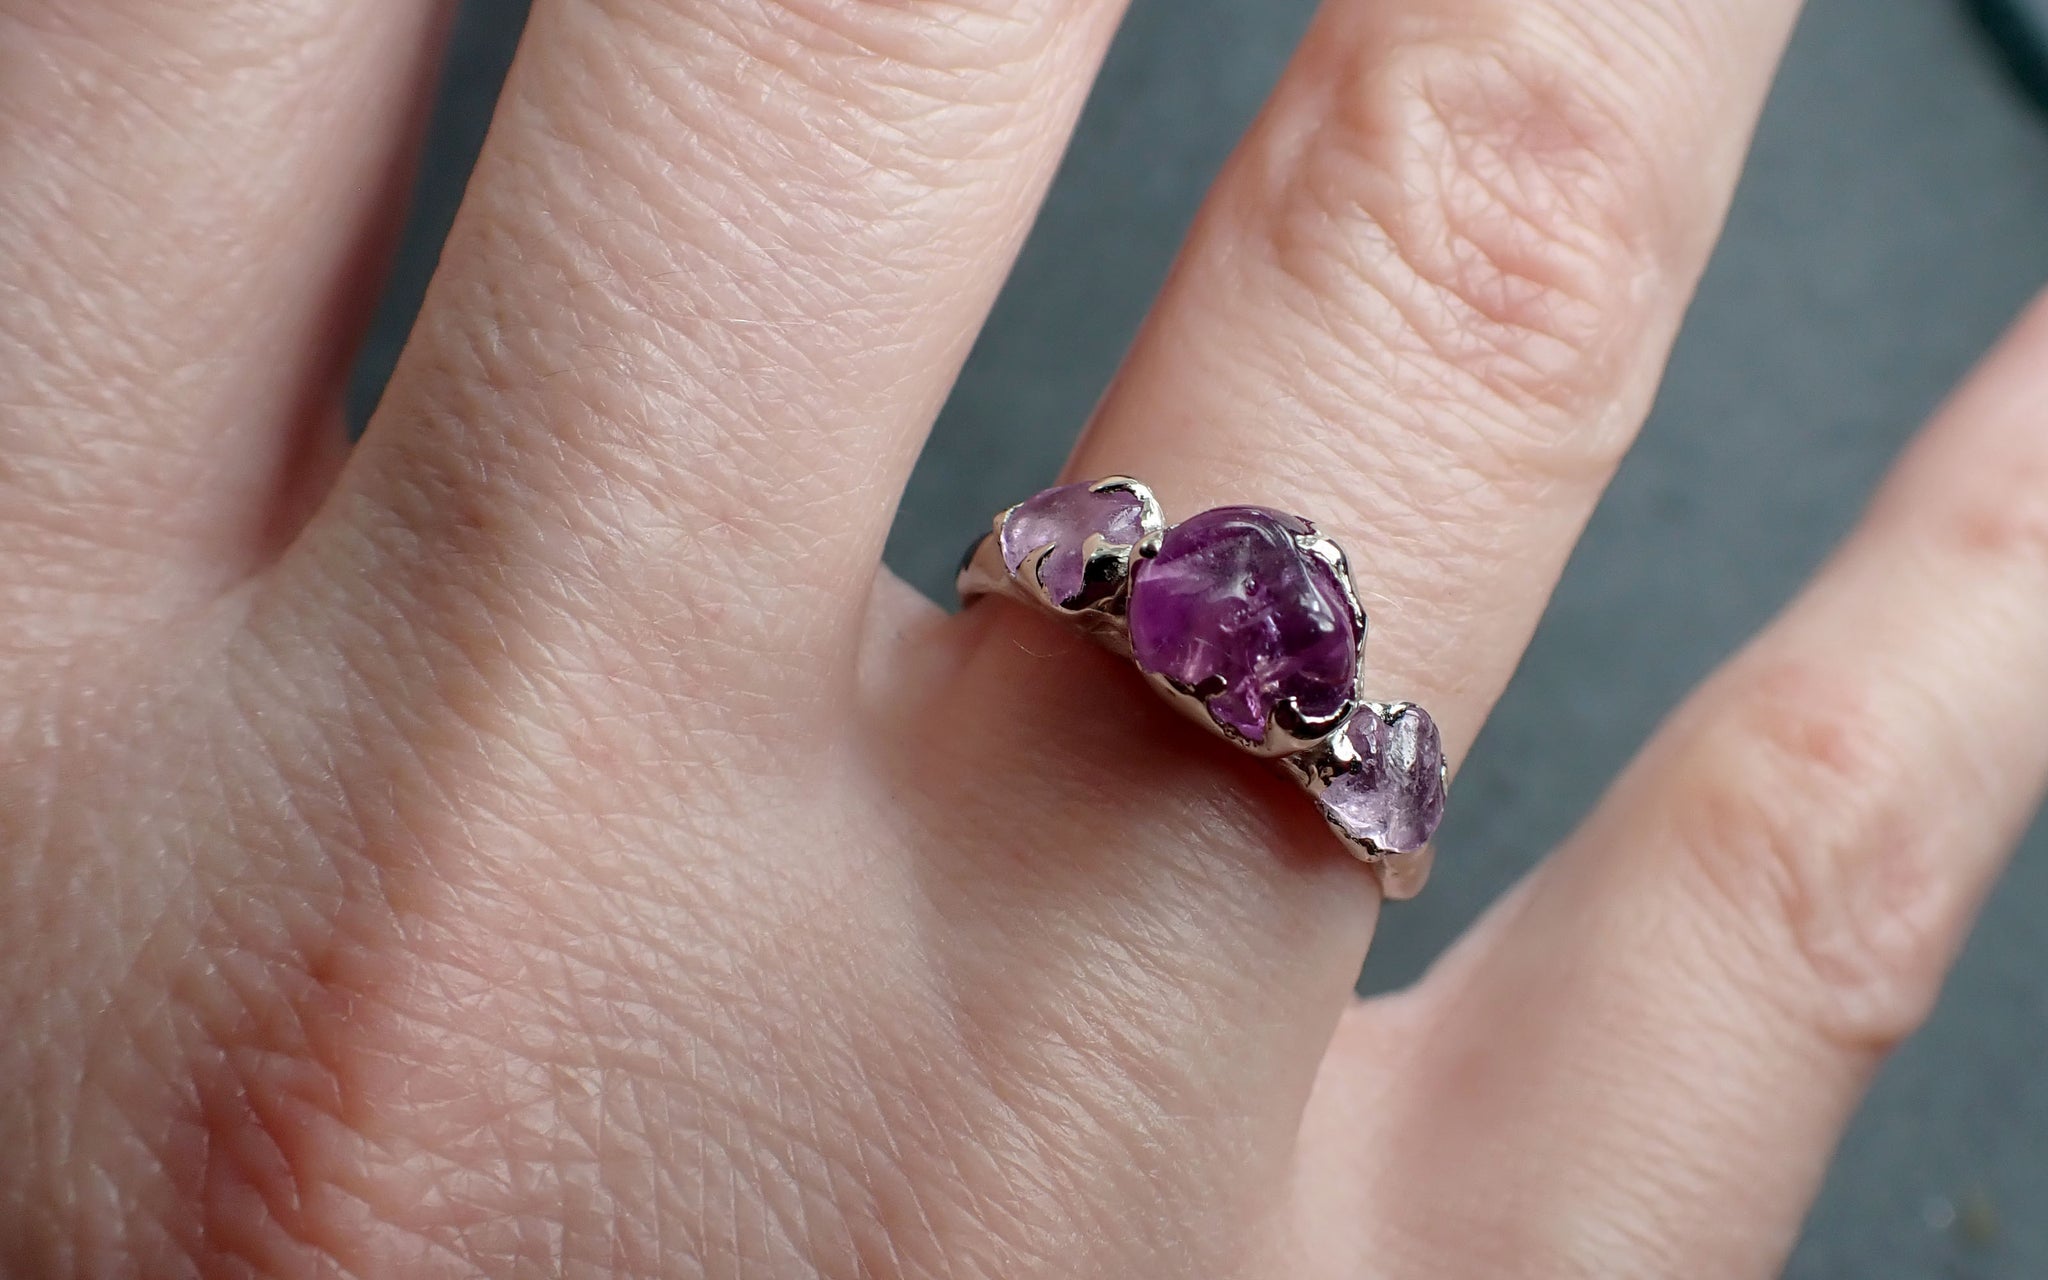 Pink Sapphire tumbled polished White 14k gold multi stone gemstone ring 2861